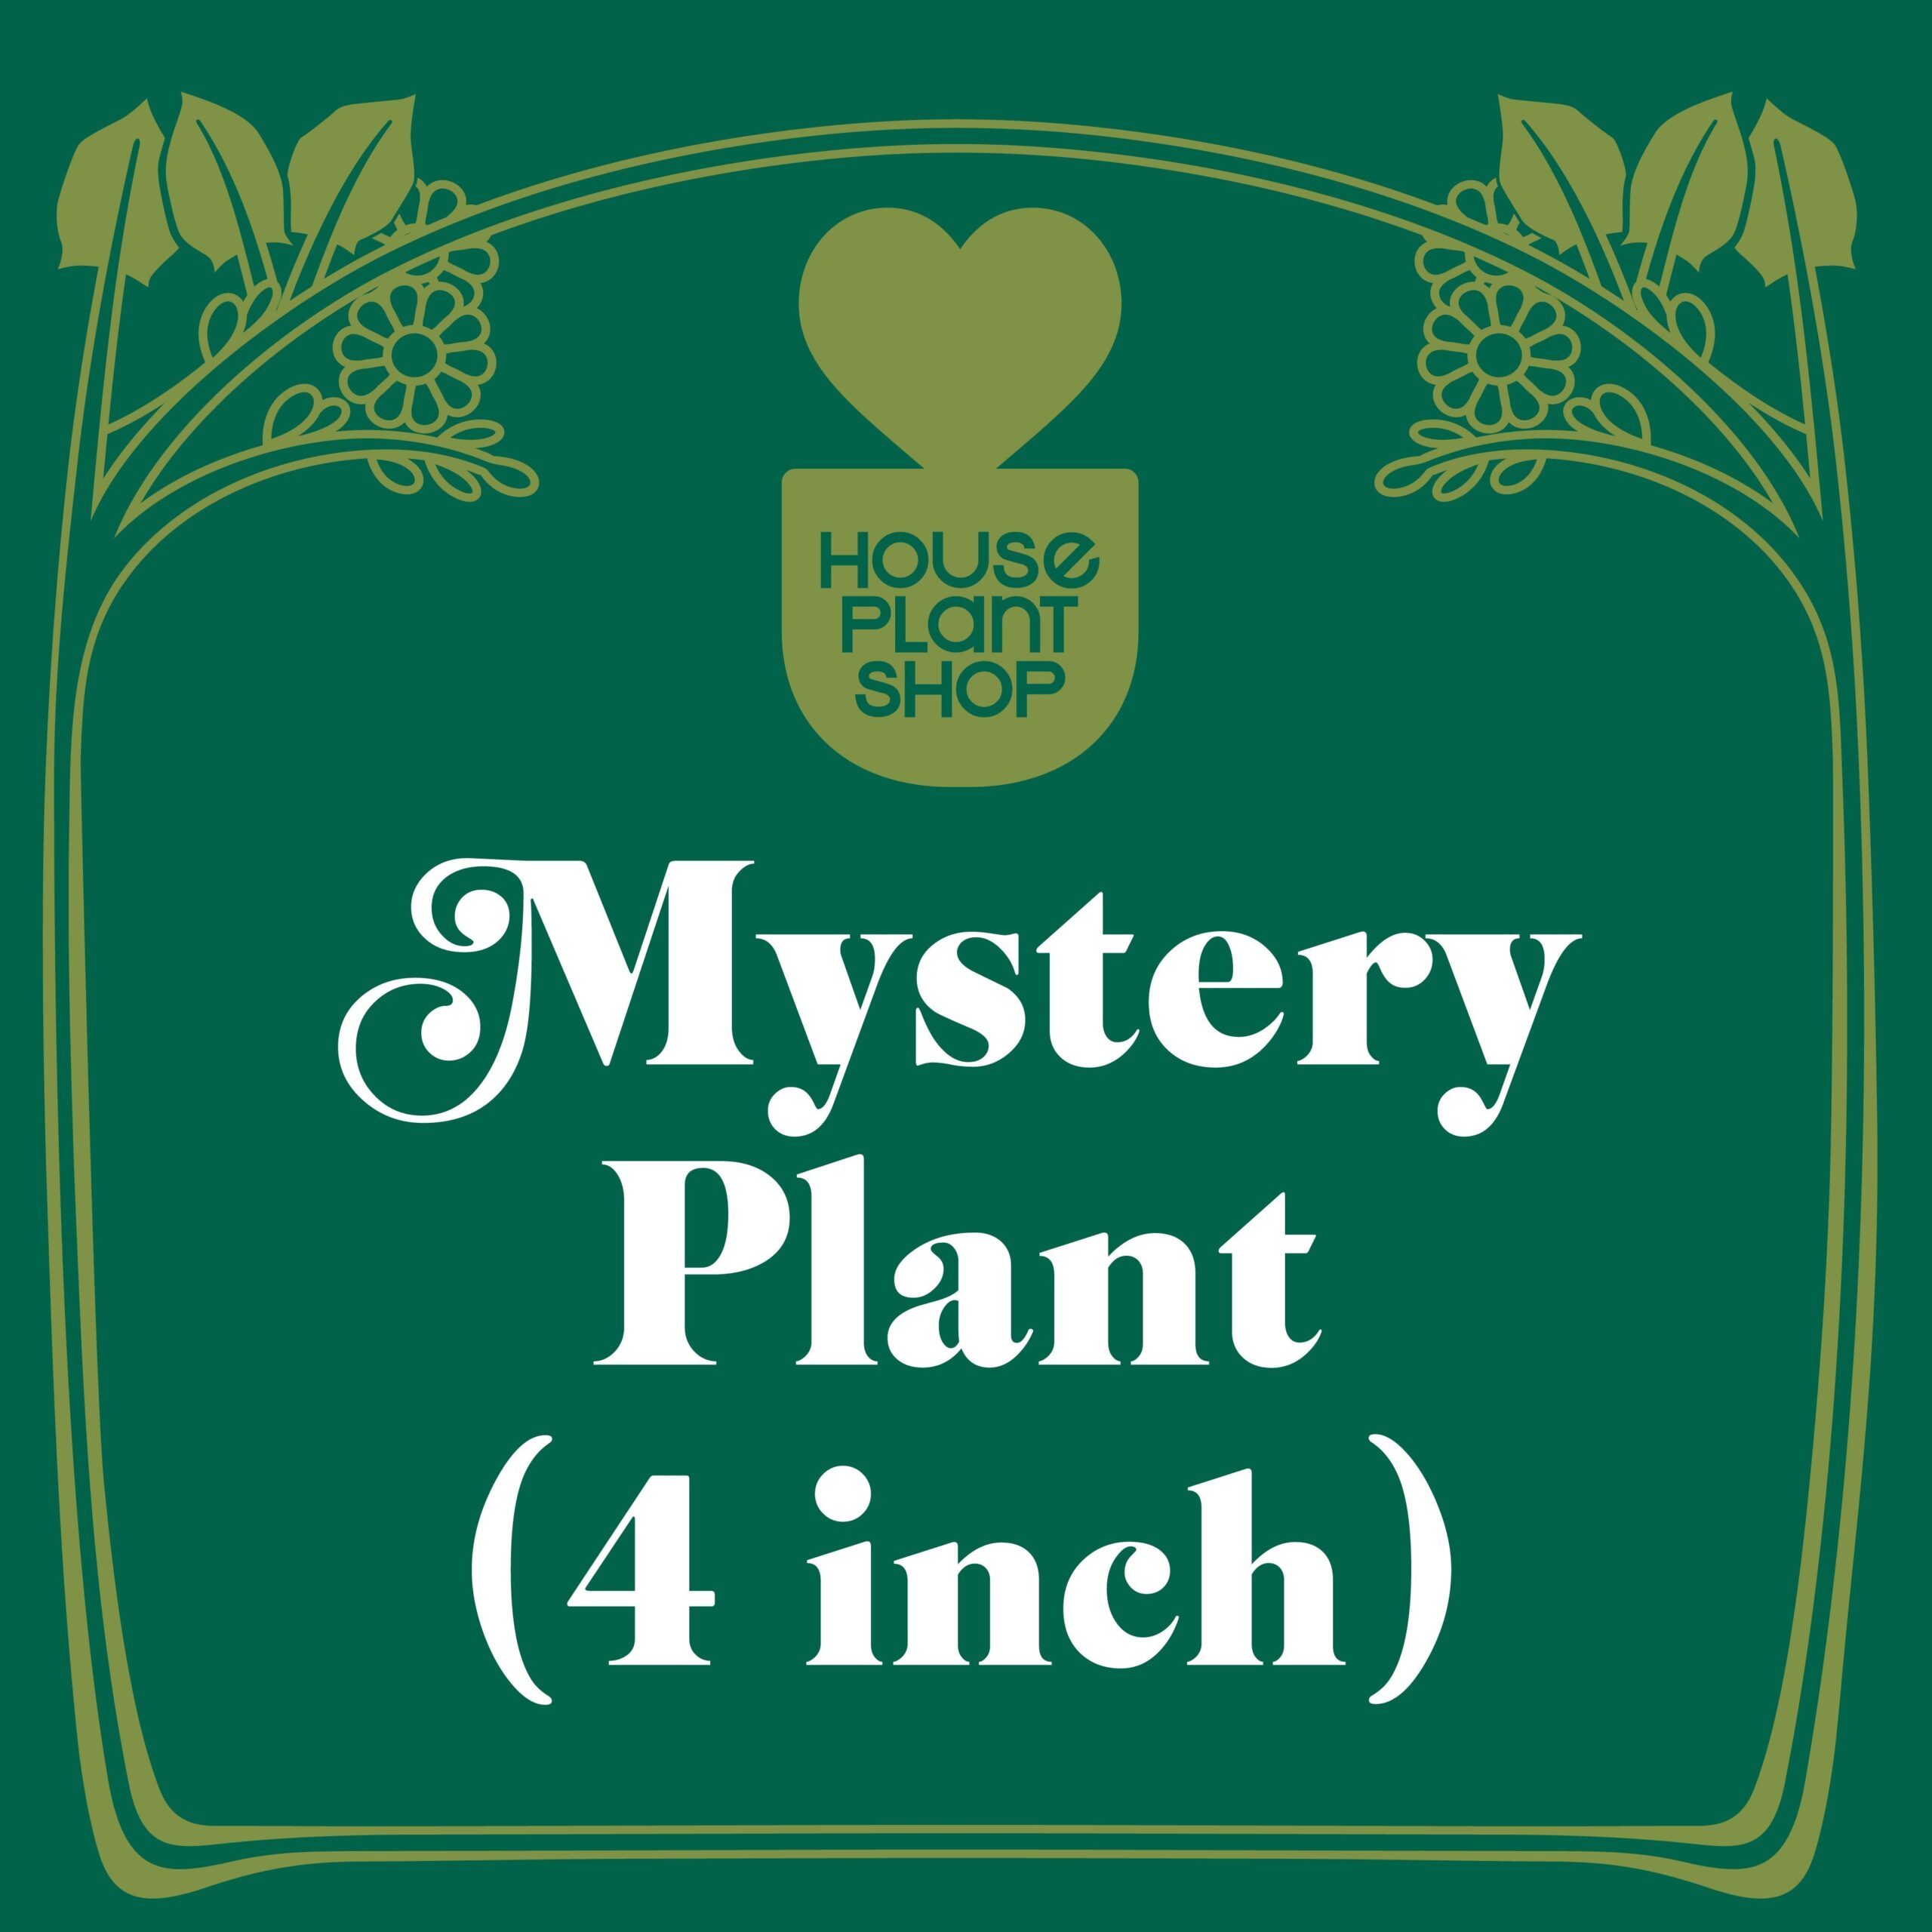 Nursery near me with mystery plant 4 inch.